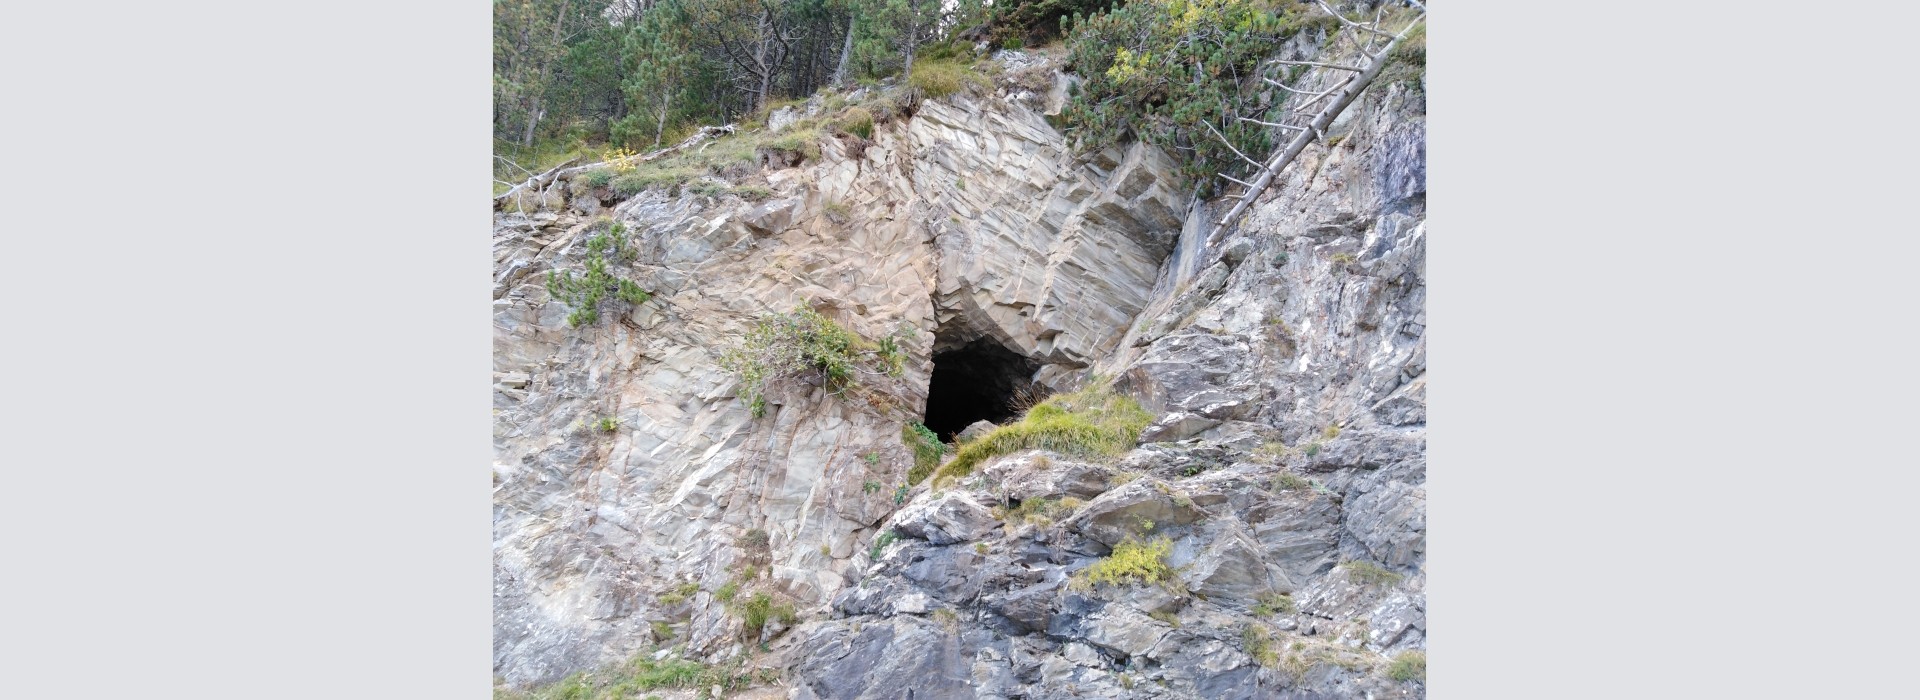 Salida del GMC a la mina “Zaragoza” (Queralbs) y a las escombreras de las minas del collet de les Barraques (Planoles), Vall de Ribes, Ripollès, Girona.